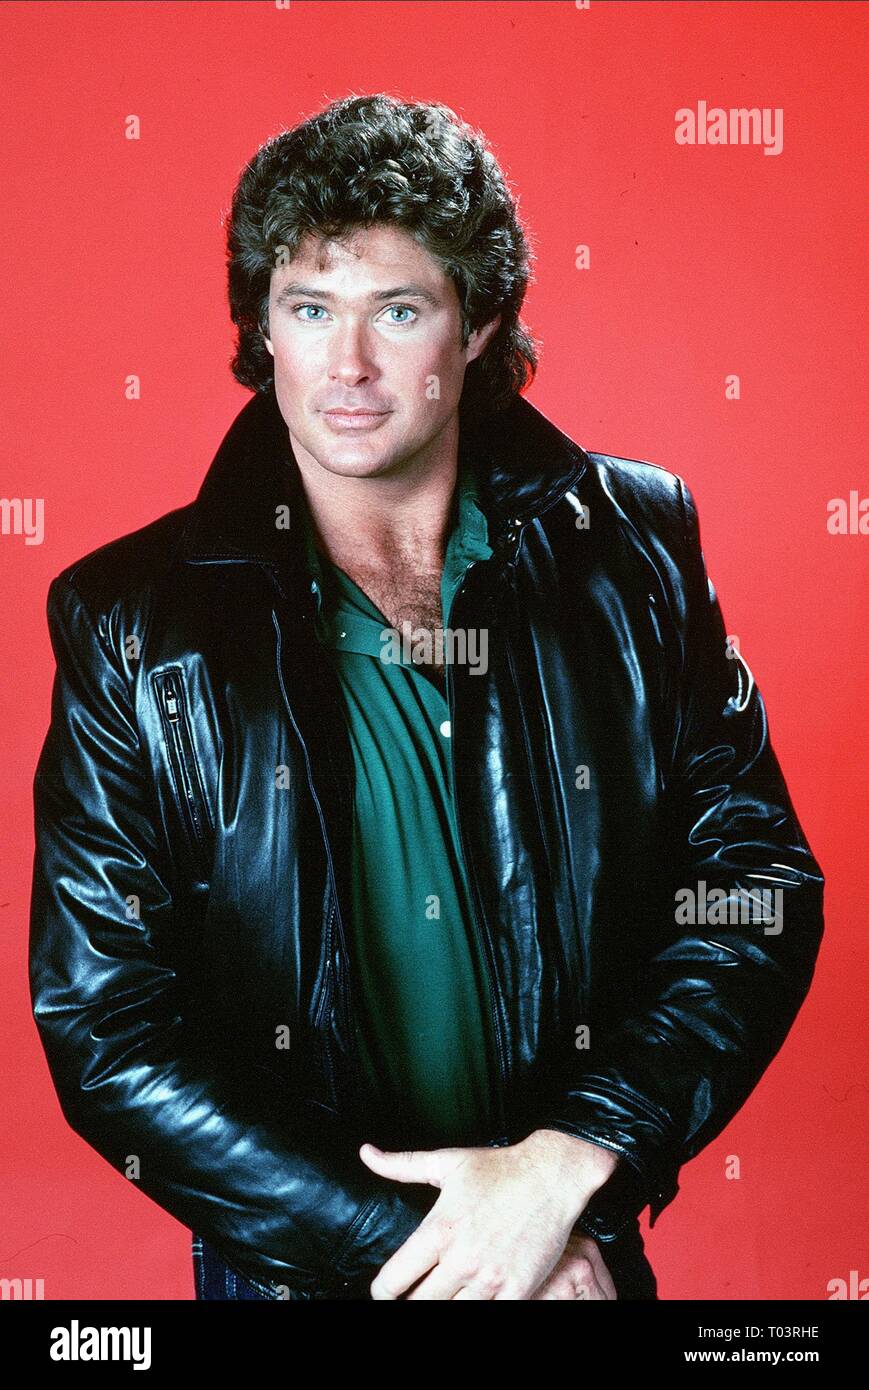 David Hasselhoff Knight Rider 1982 Stockfotografie Alamy